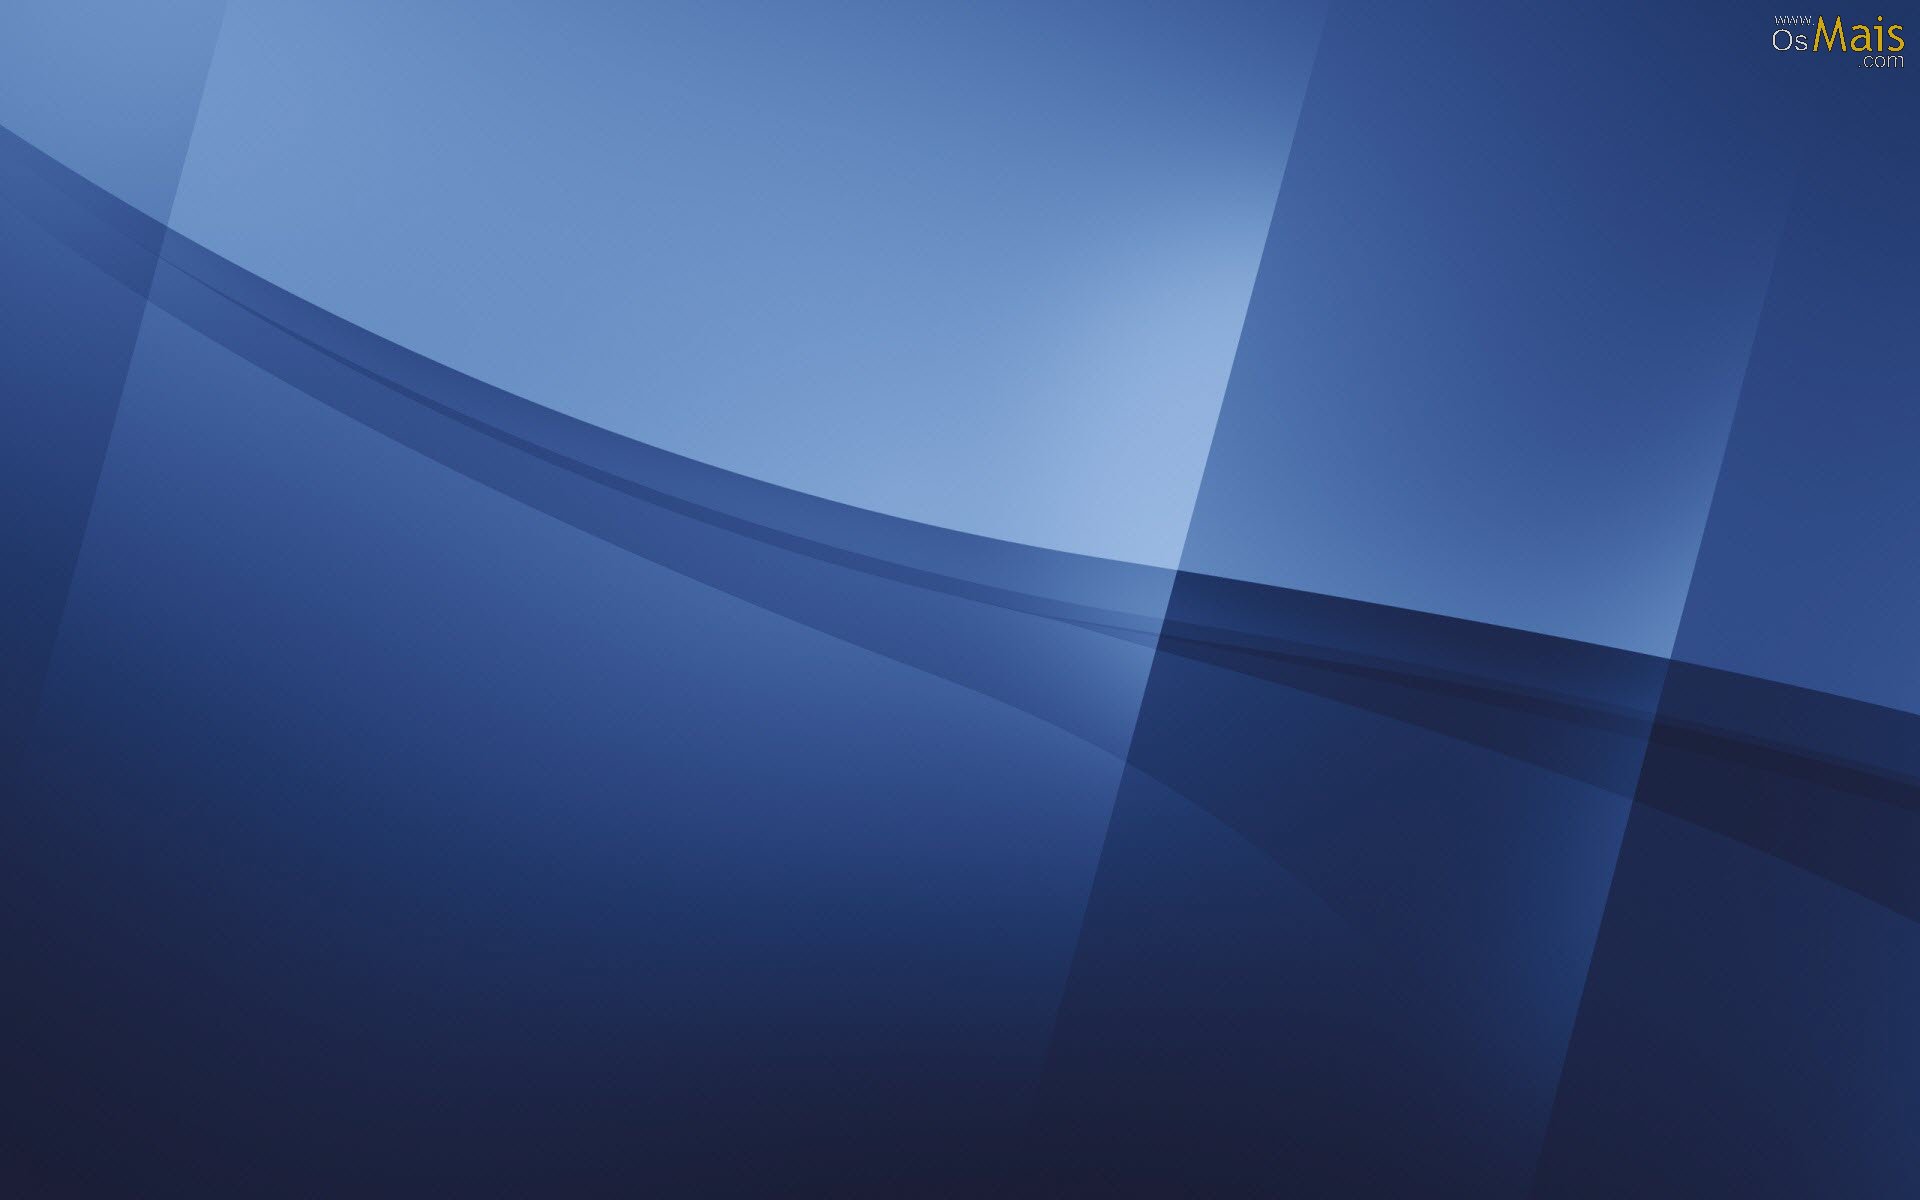 Windows 10 Wallpaper 1920X1200 - WallpaperSafari